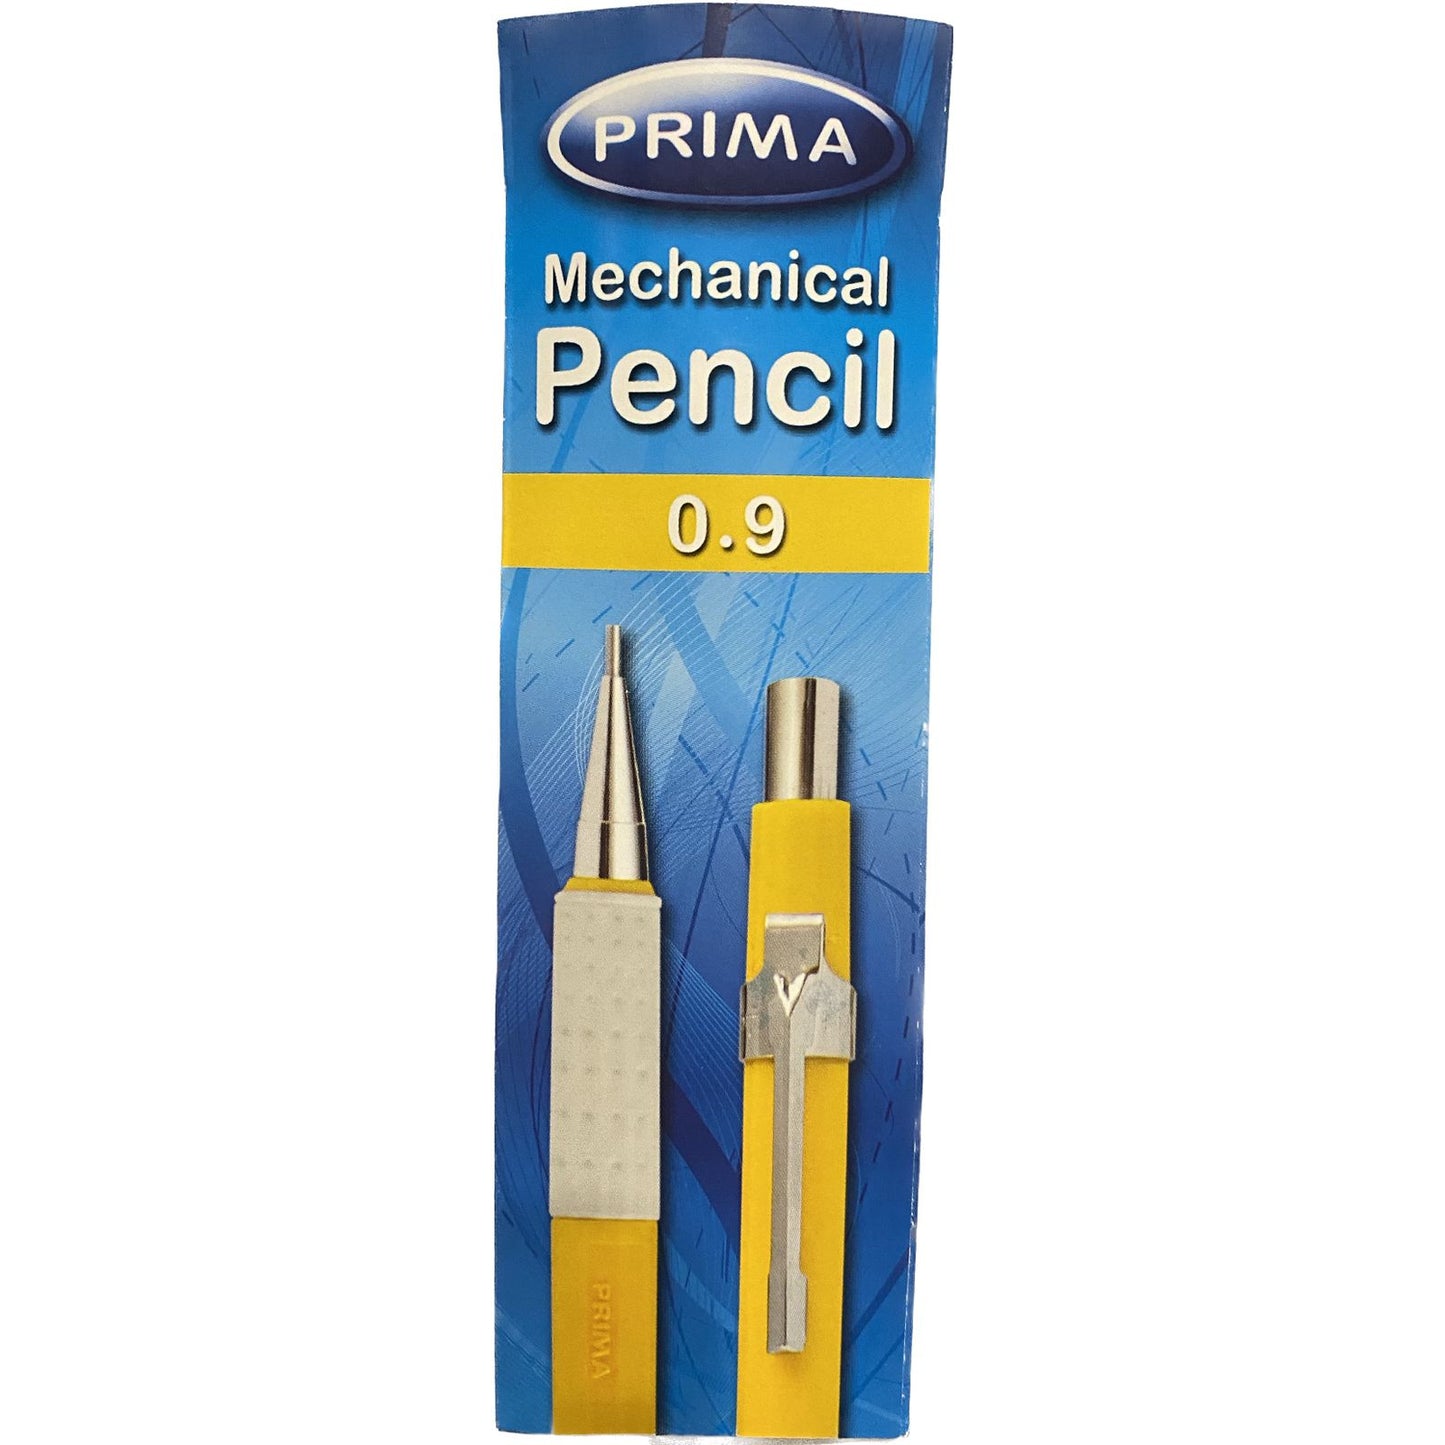 Prima Mechanical Pencils